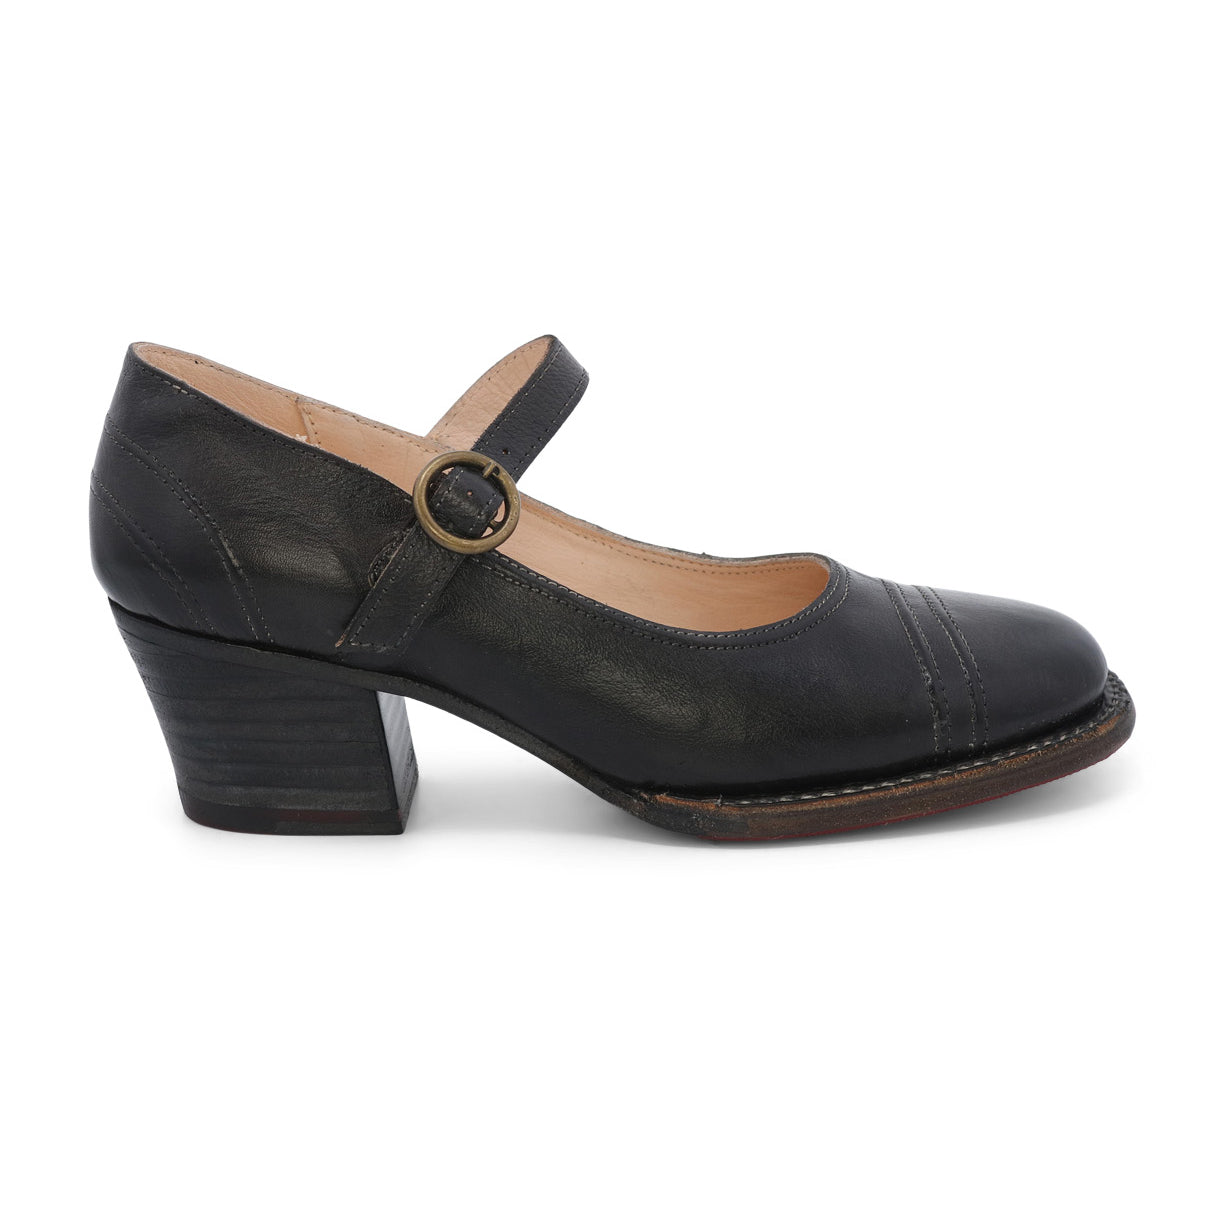 A women's black leather Mary Jane shoe with a buckle, Oak Tree Farms Twigley style.